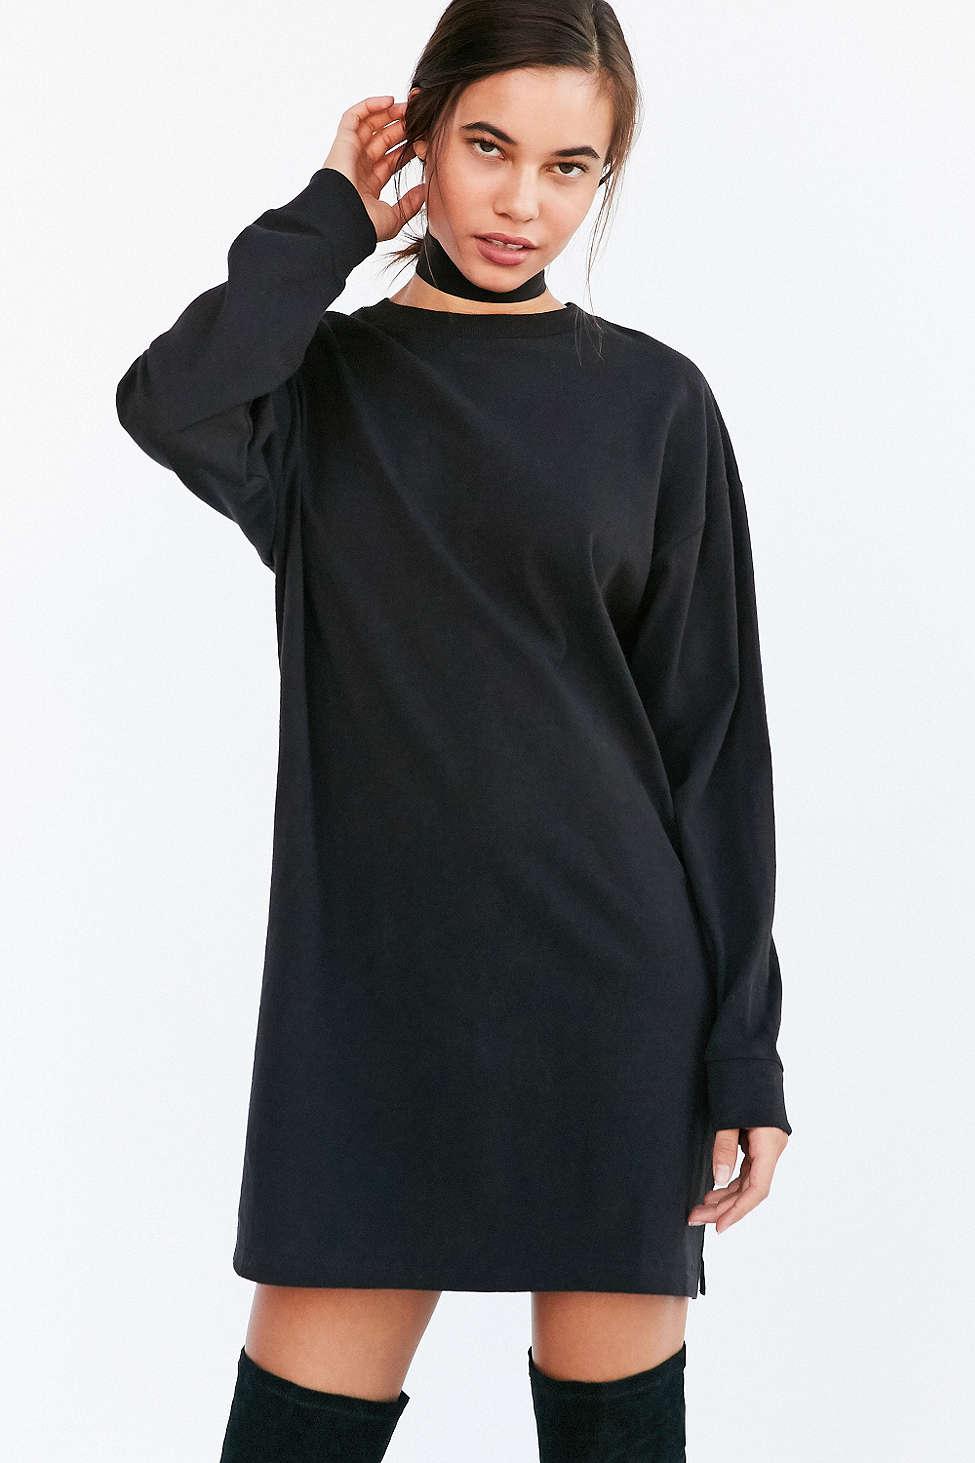 Bdg Maeby Oversized Long  sleeve  T  shirt  Dress  in Black  Lyst